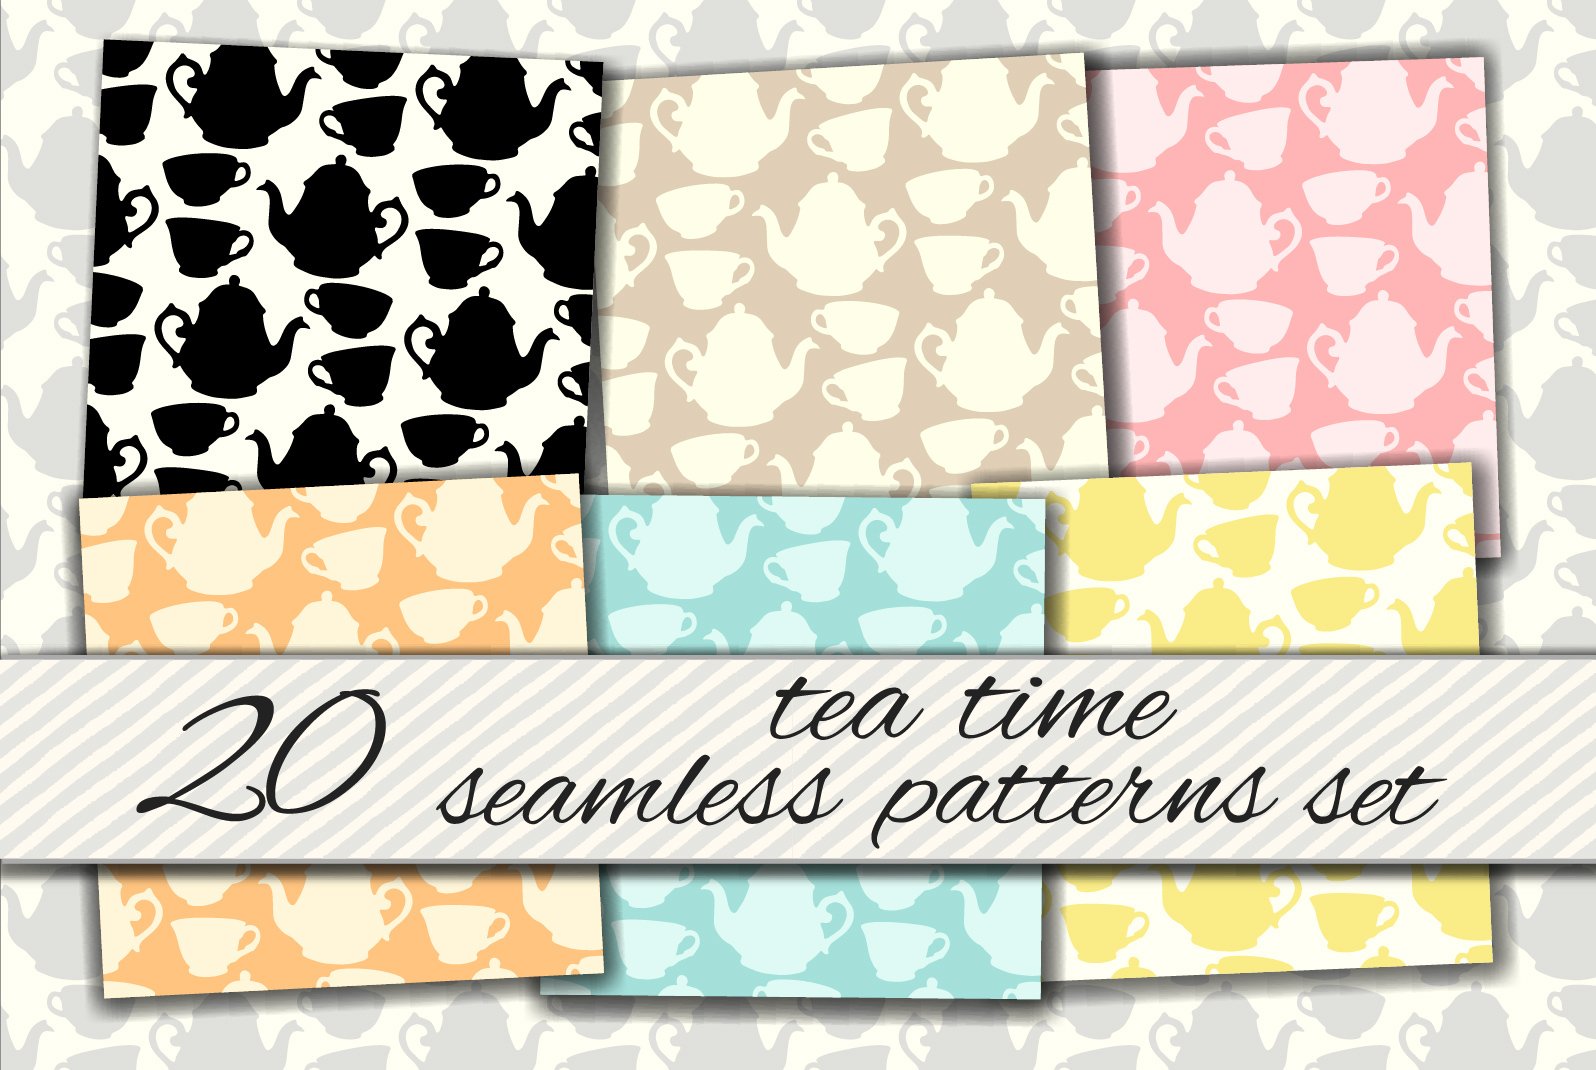 Teatime seamless patterns set cover image.